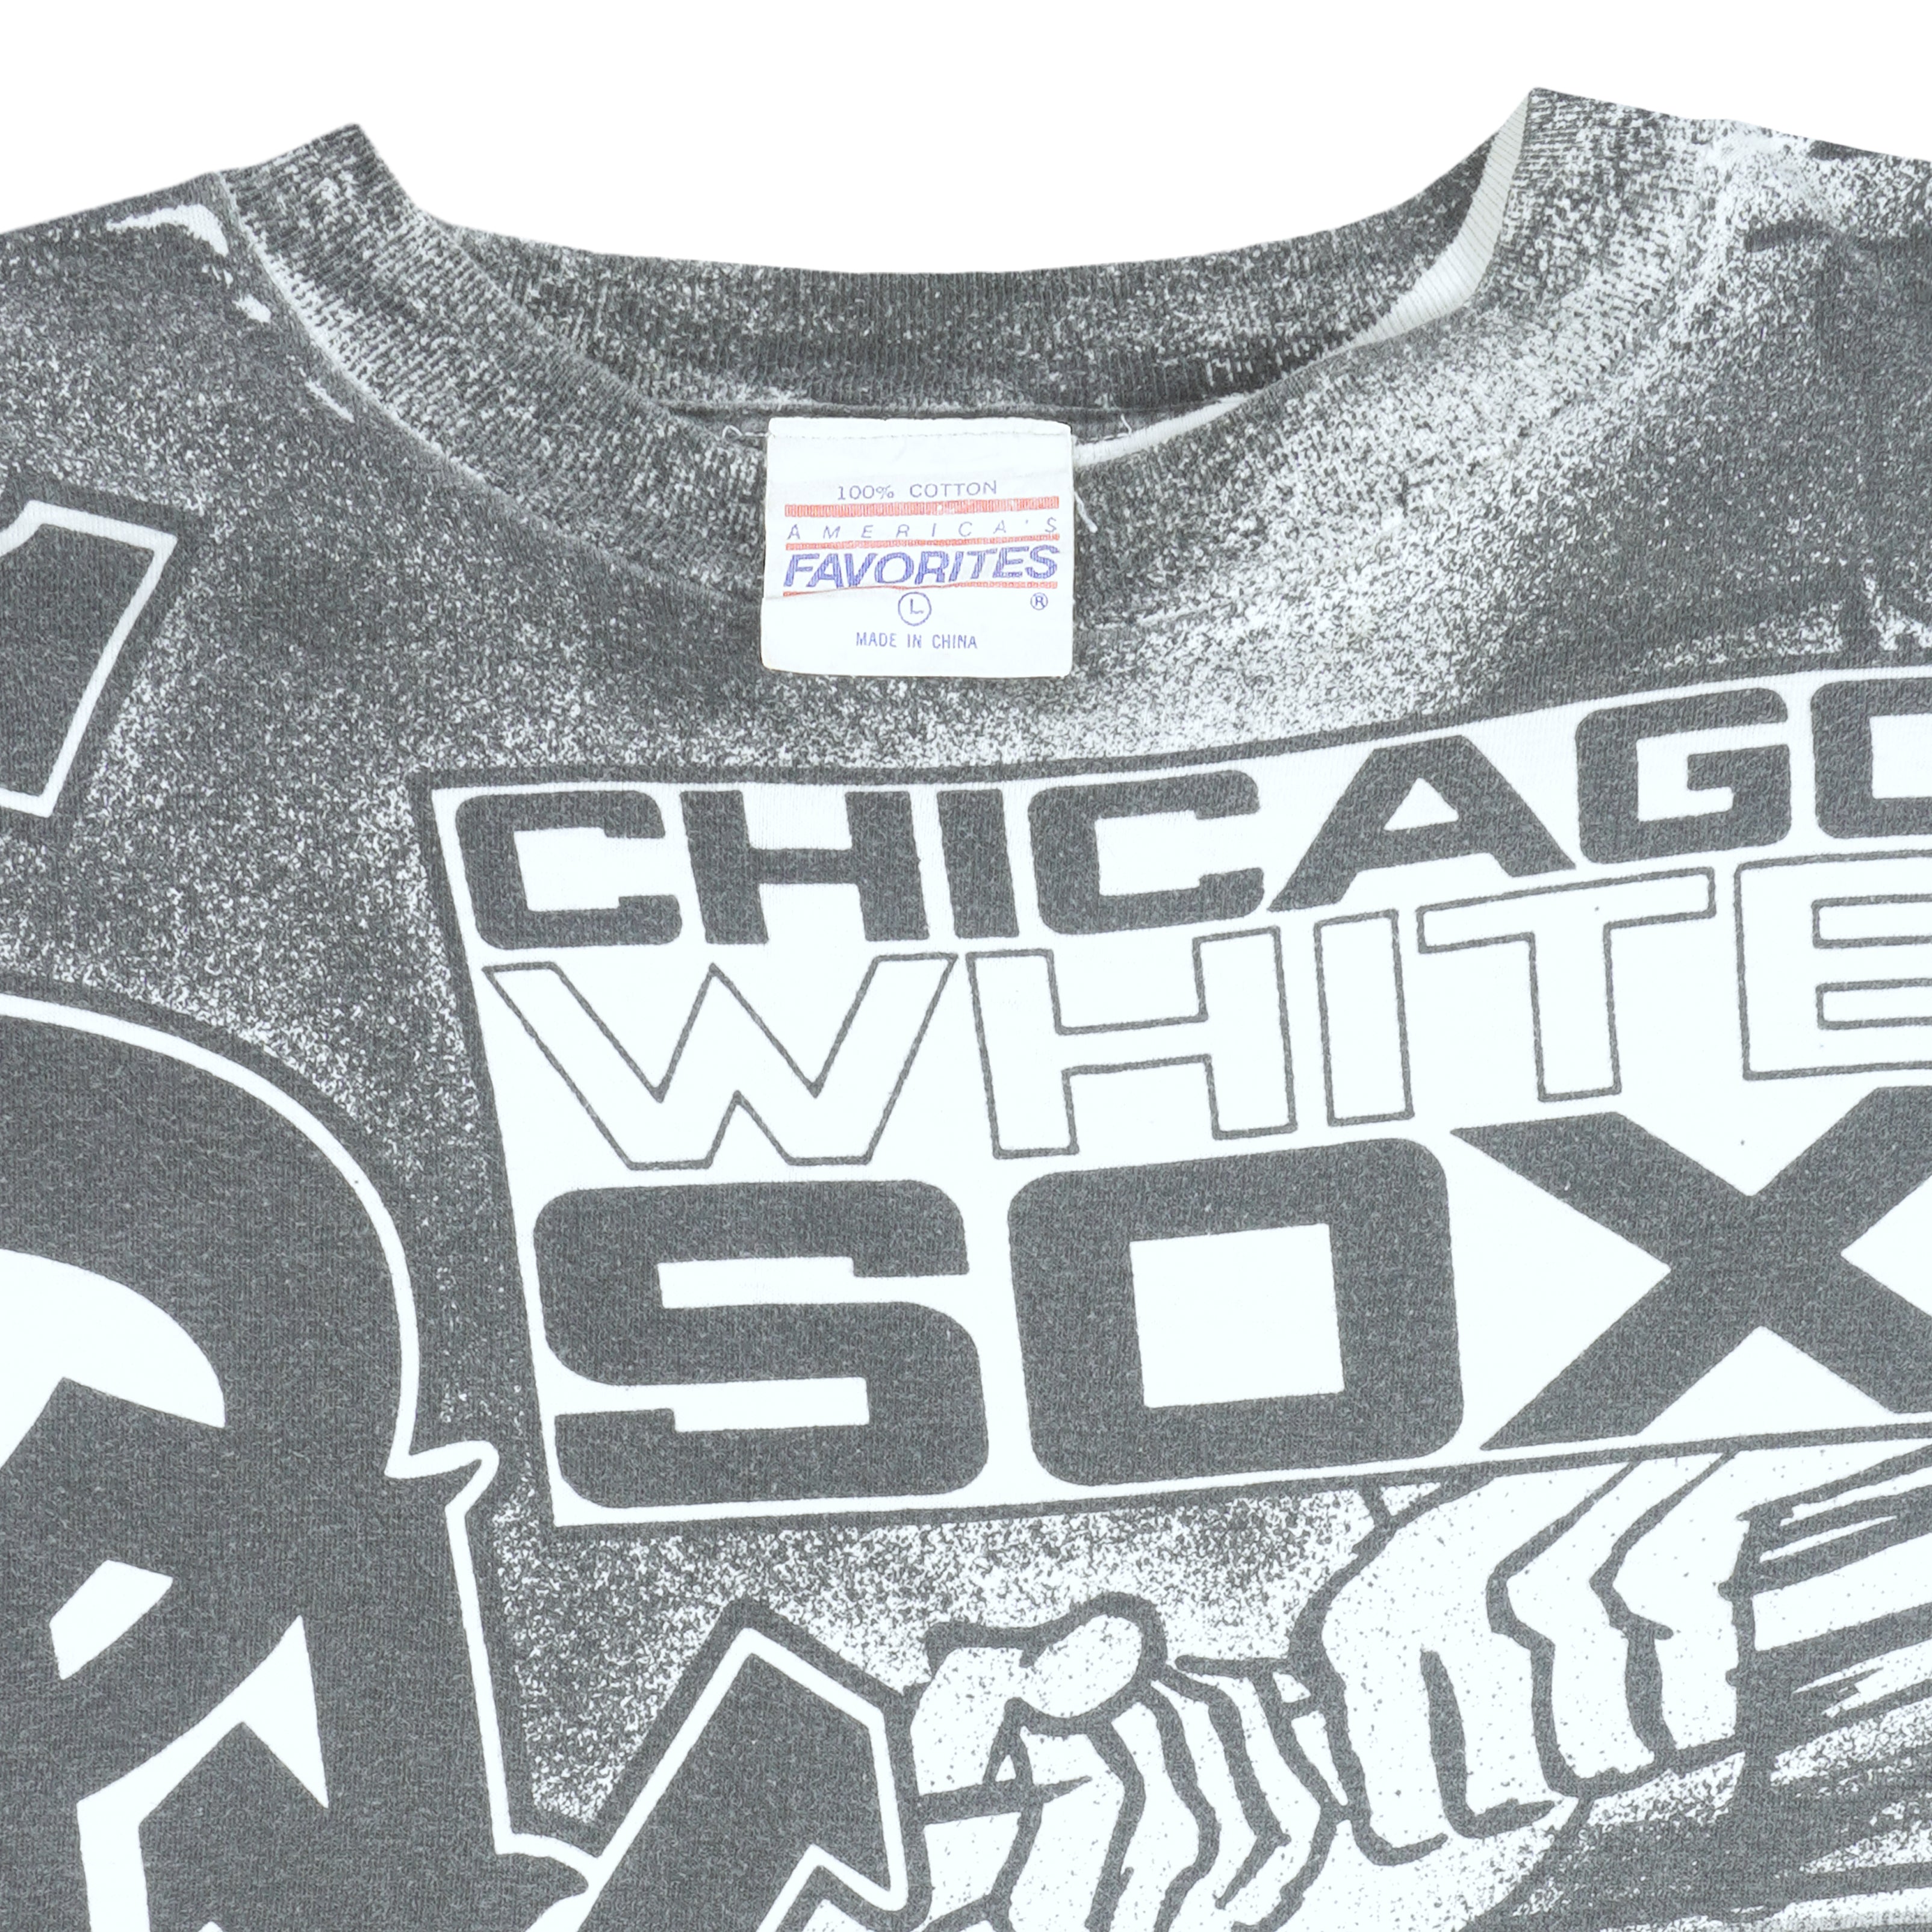 Vintage 90's Chicago White Sox Starter All Over Print Shirt Size Large